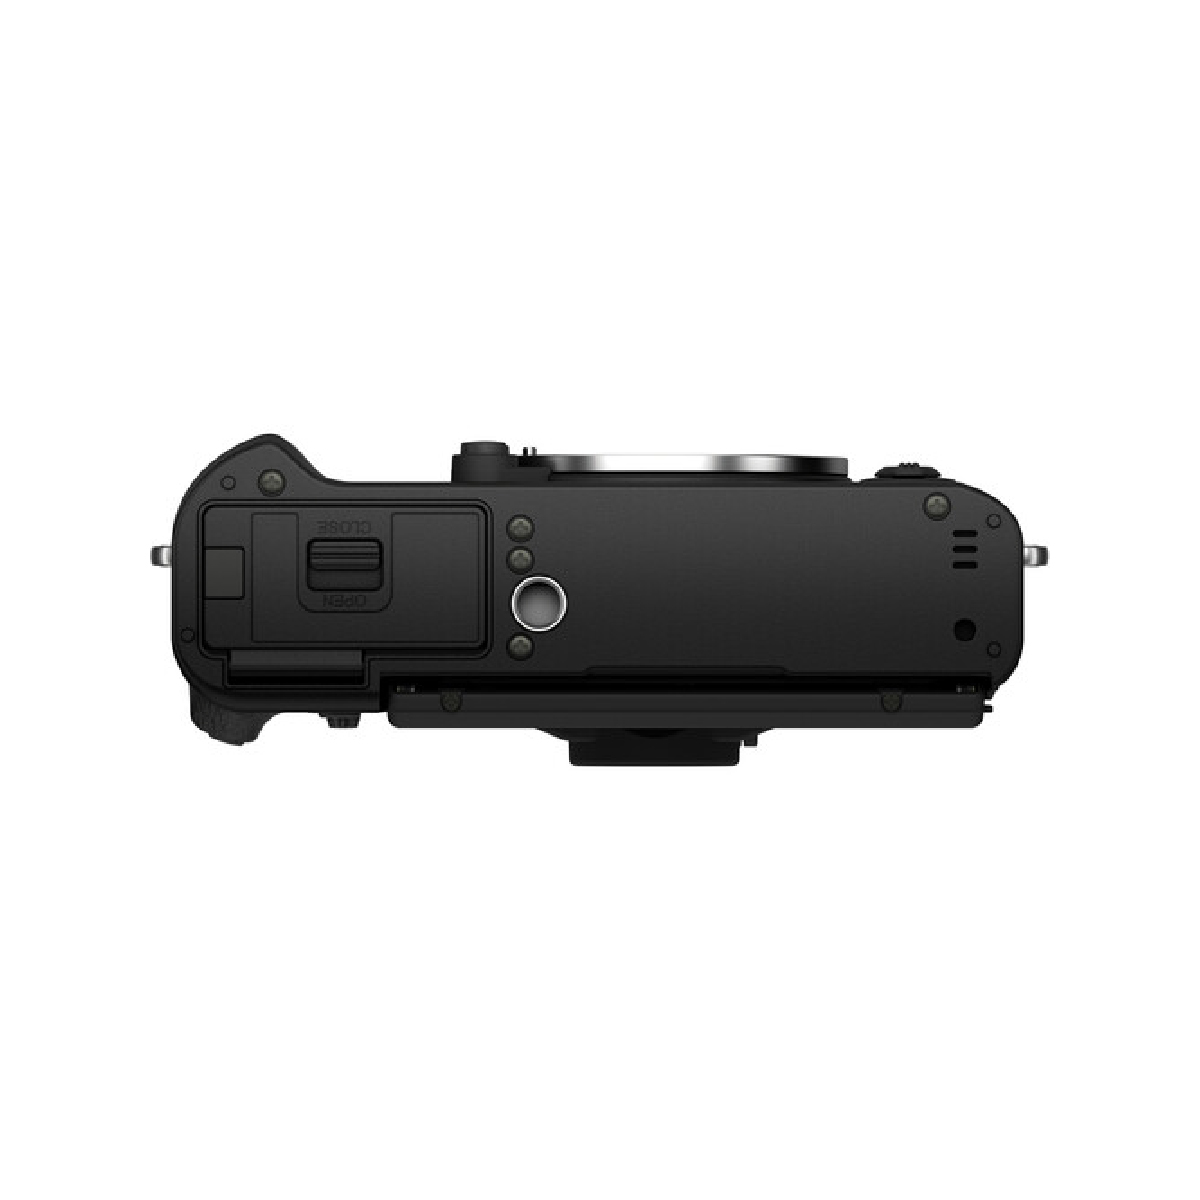 Fujifilm X-T30 II Camera Body With XF18-55mm Lens – Black (8)